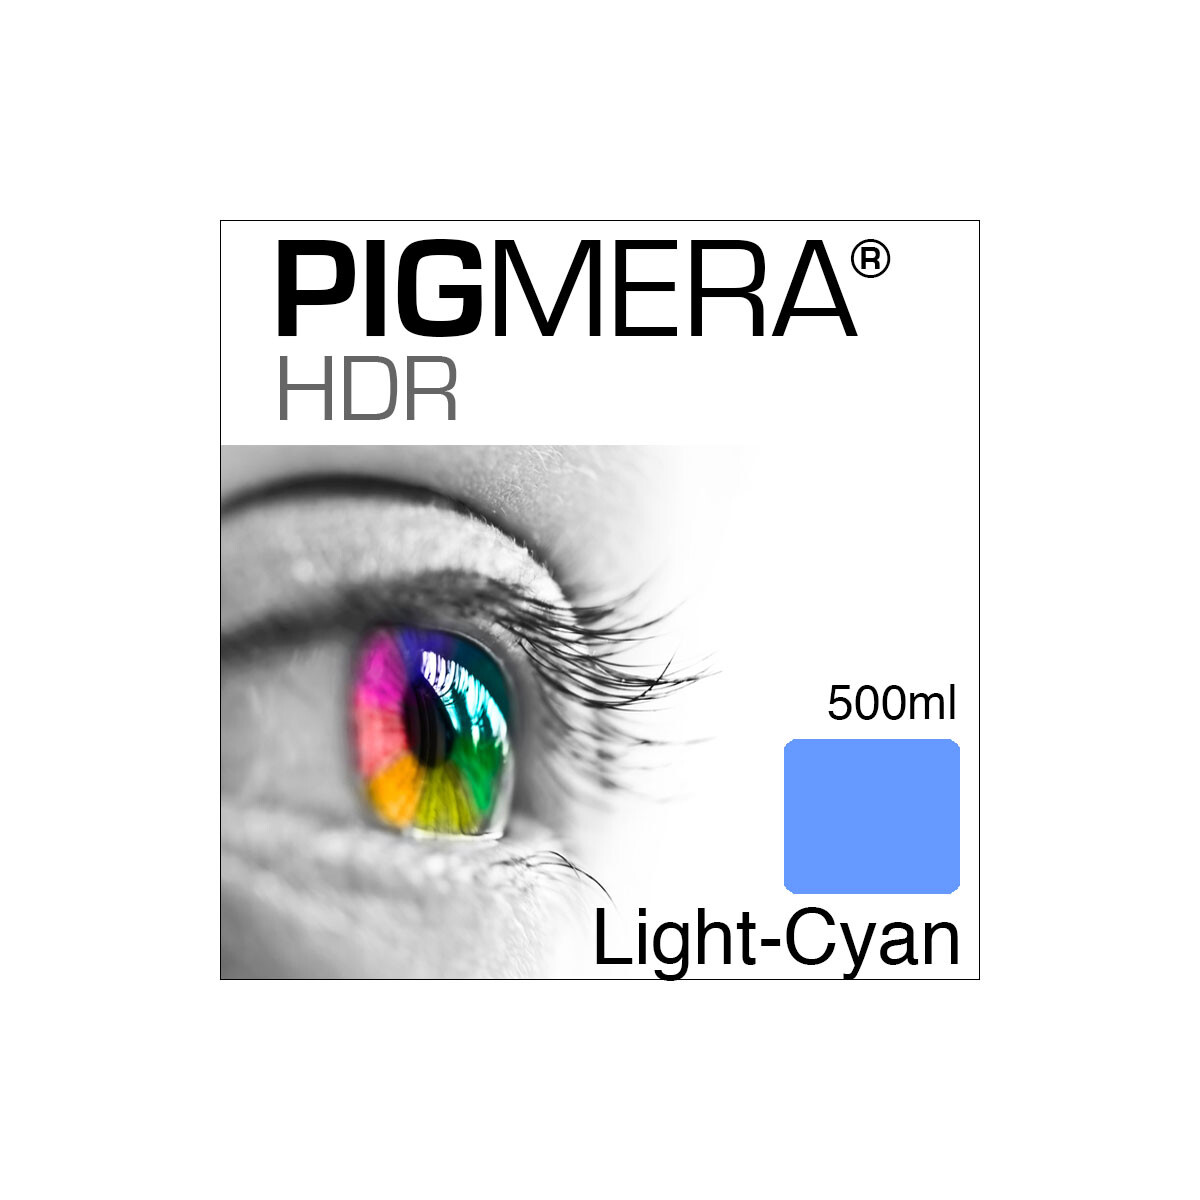 farbenwerk Pigmera HDR Bottle Light-Cyan 500ml